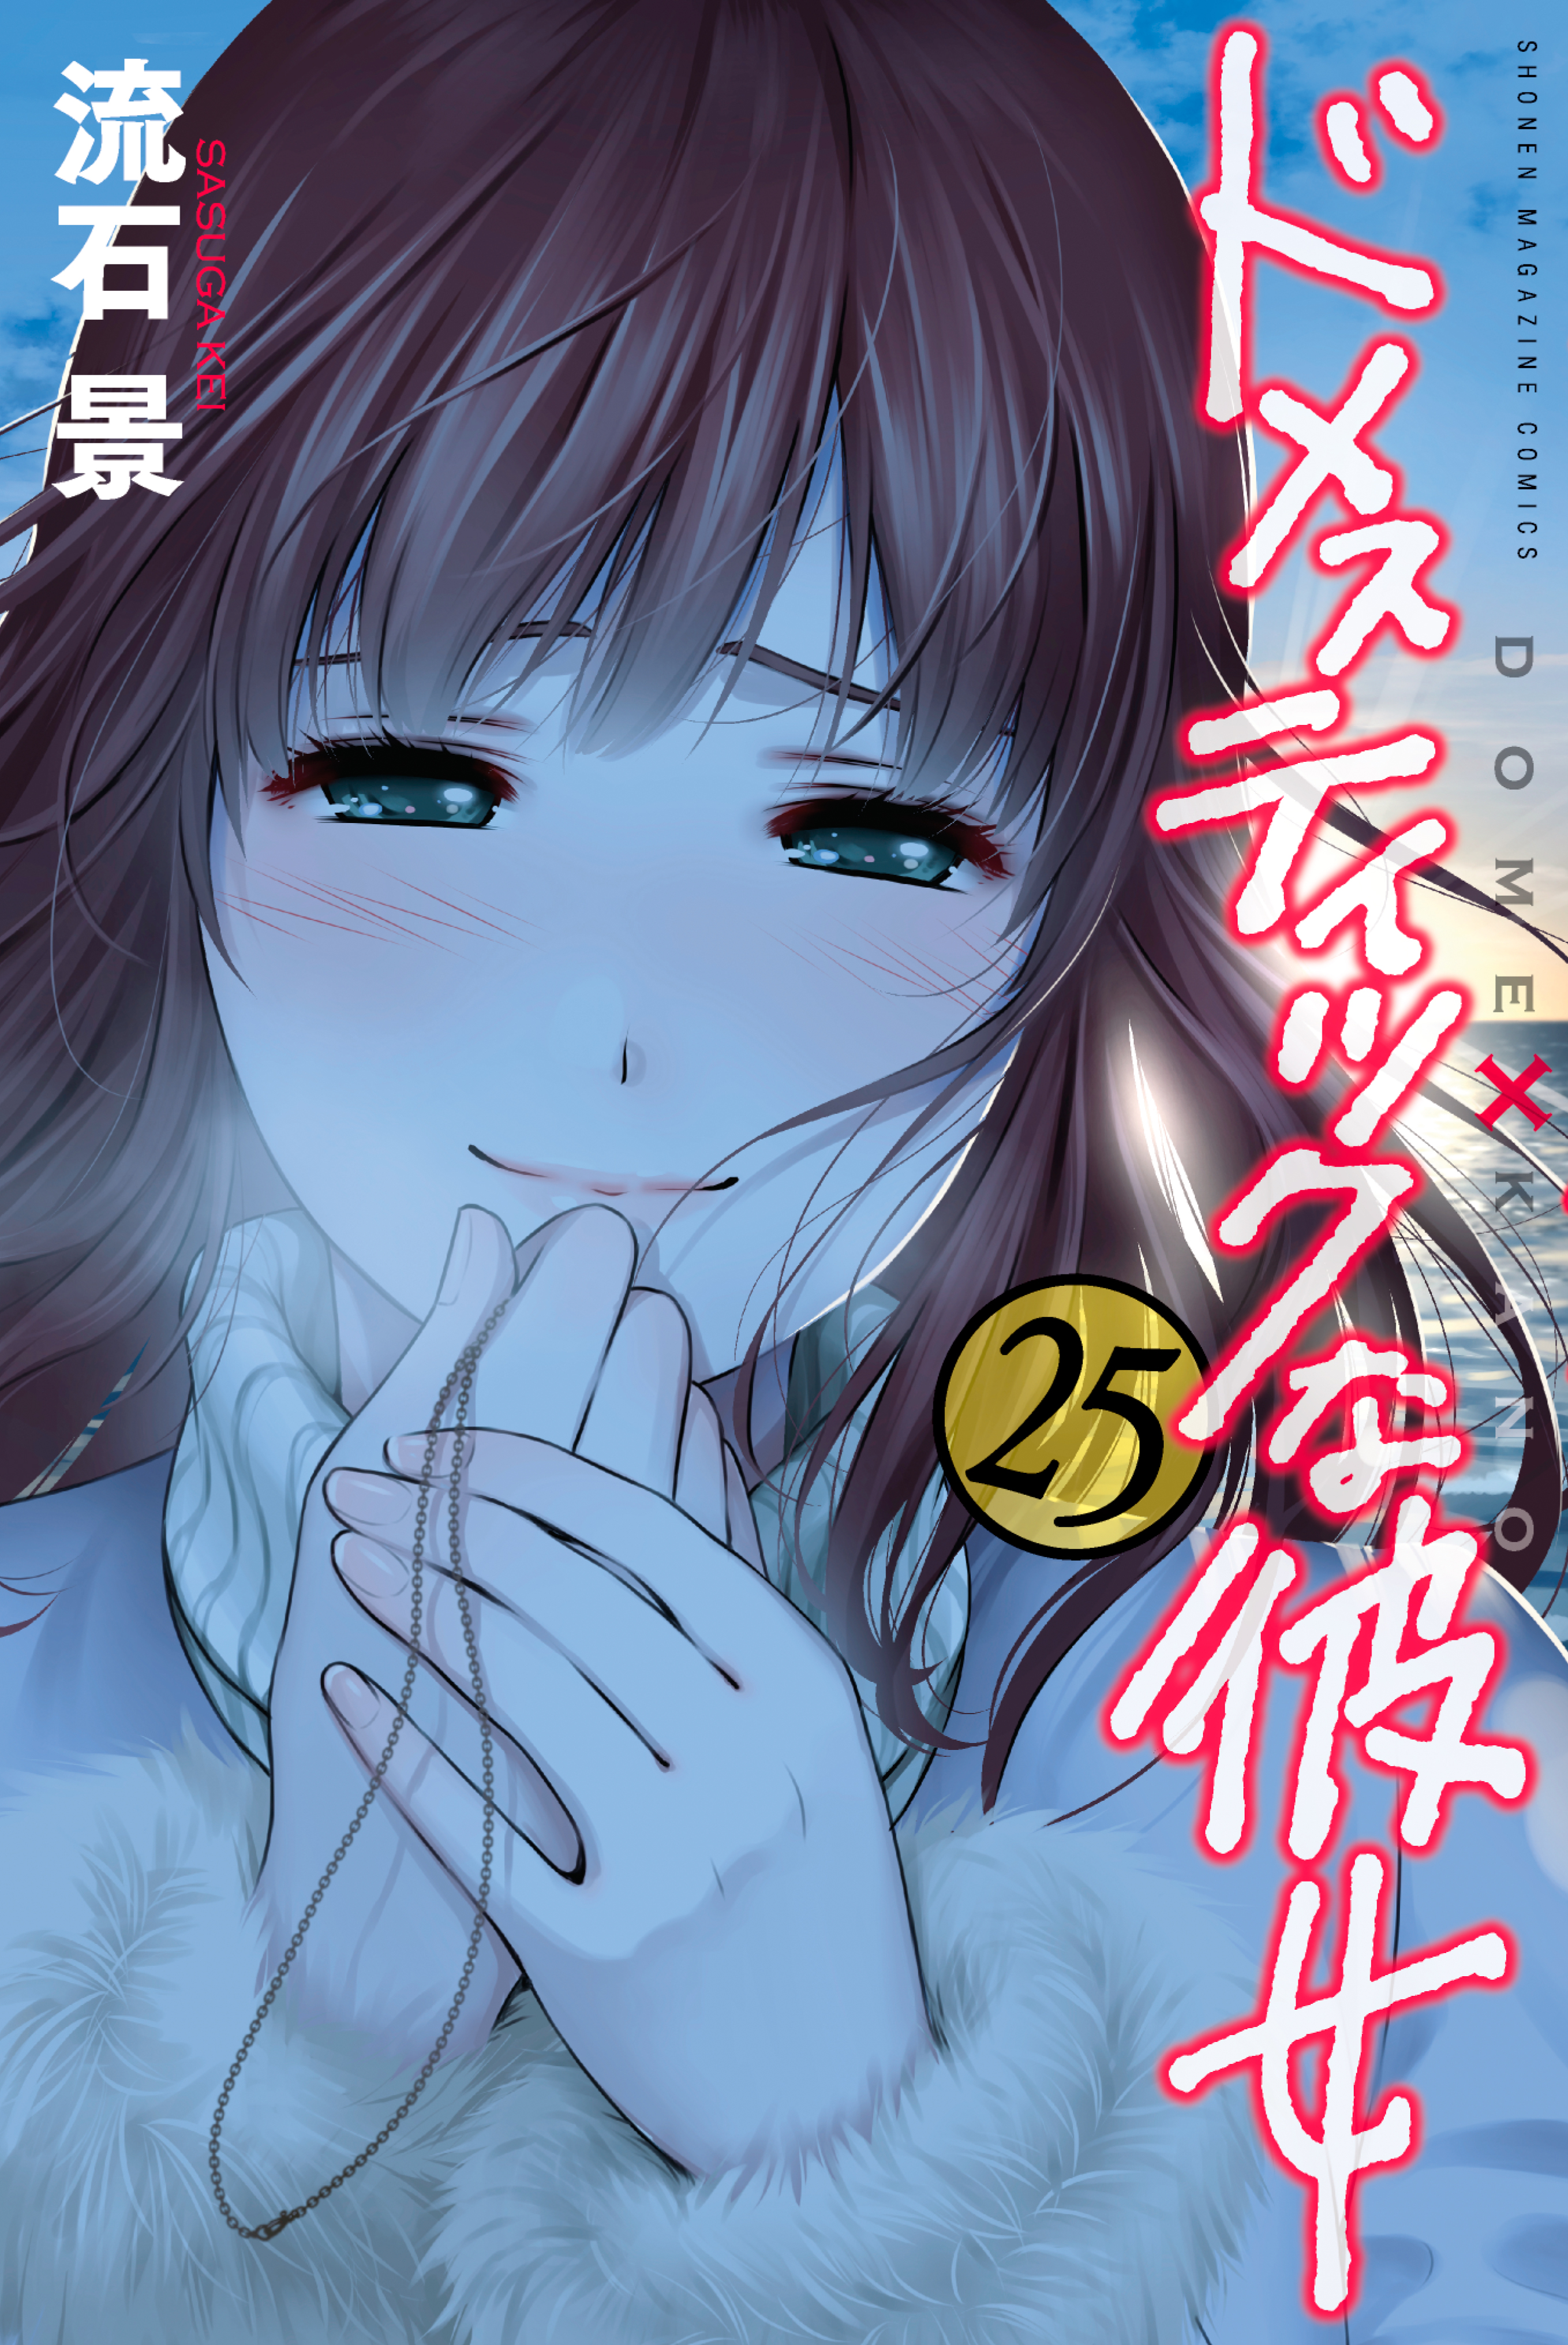 Domestic Girlfriend Volume 11 (Domestic na Kanojo) - Manga Store 